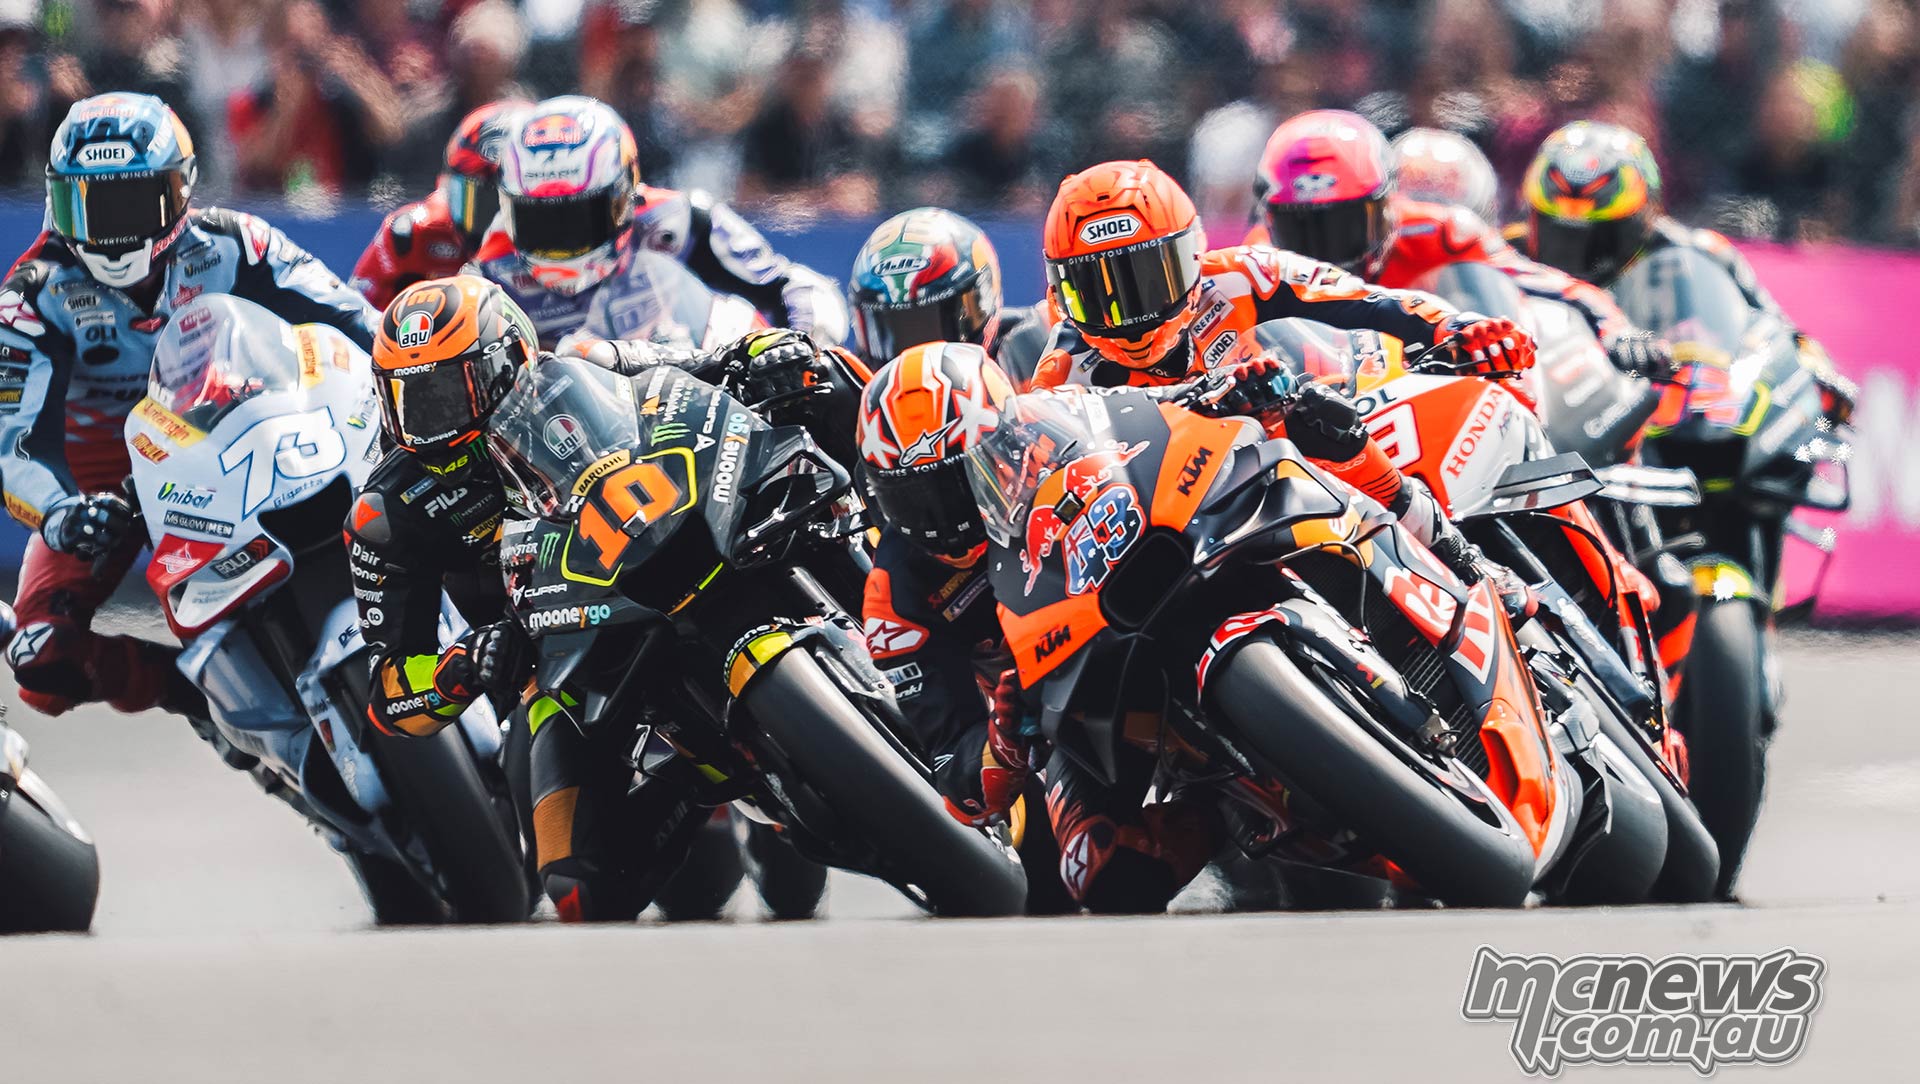 MotoGP scraps Kazakhstan GP for 2023, calendar cut to 20 races